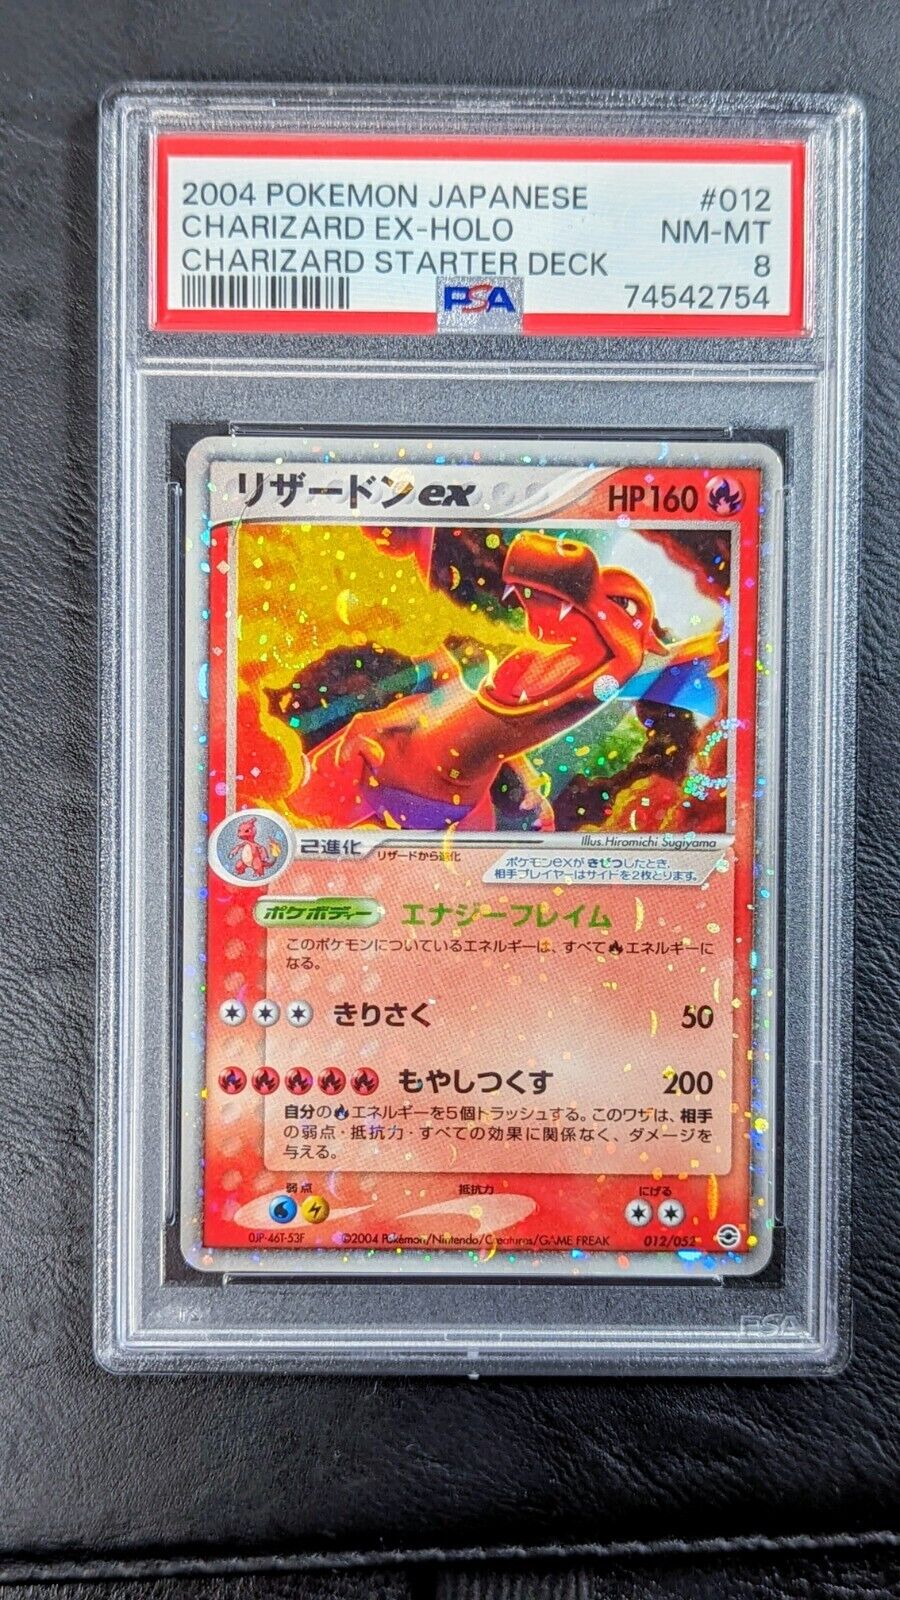 Pokemon Card 2004 Japanese Charizard Ex Starter Deck 012/052 1st Edition PSA 8